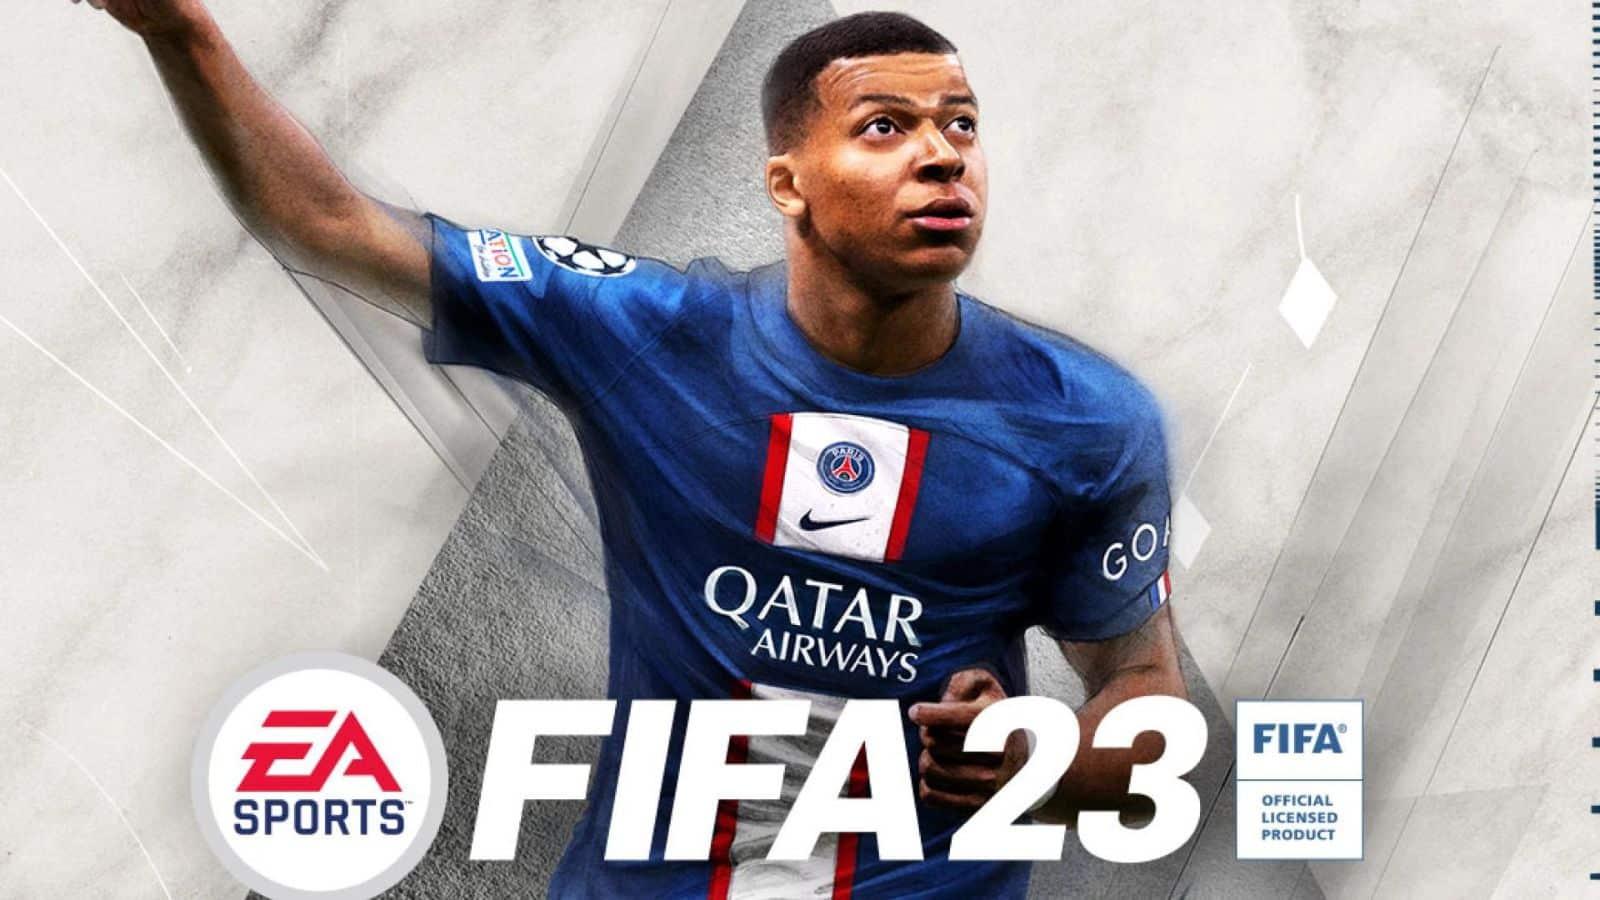 FIFA 23 Mabppe cover